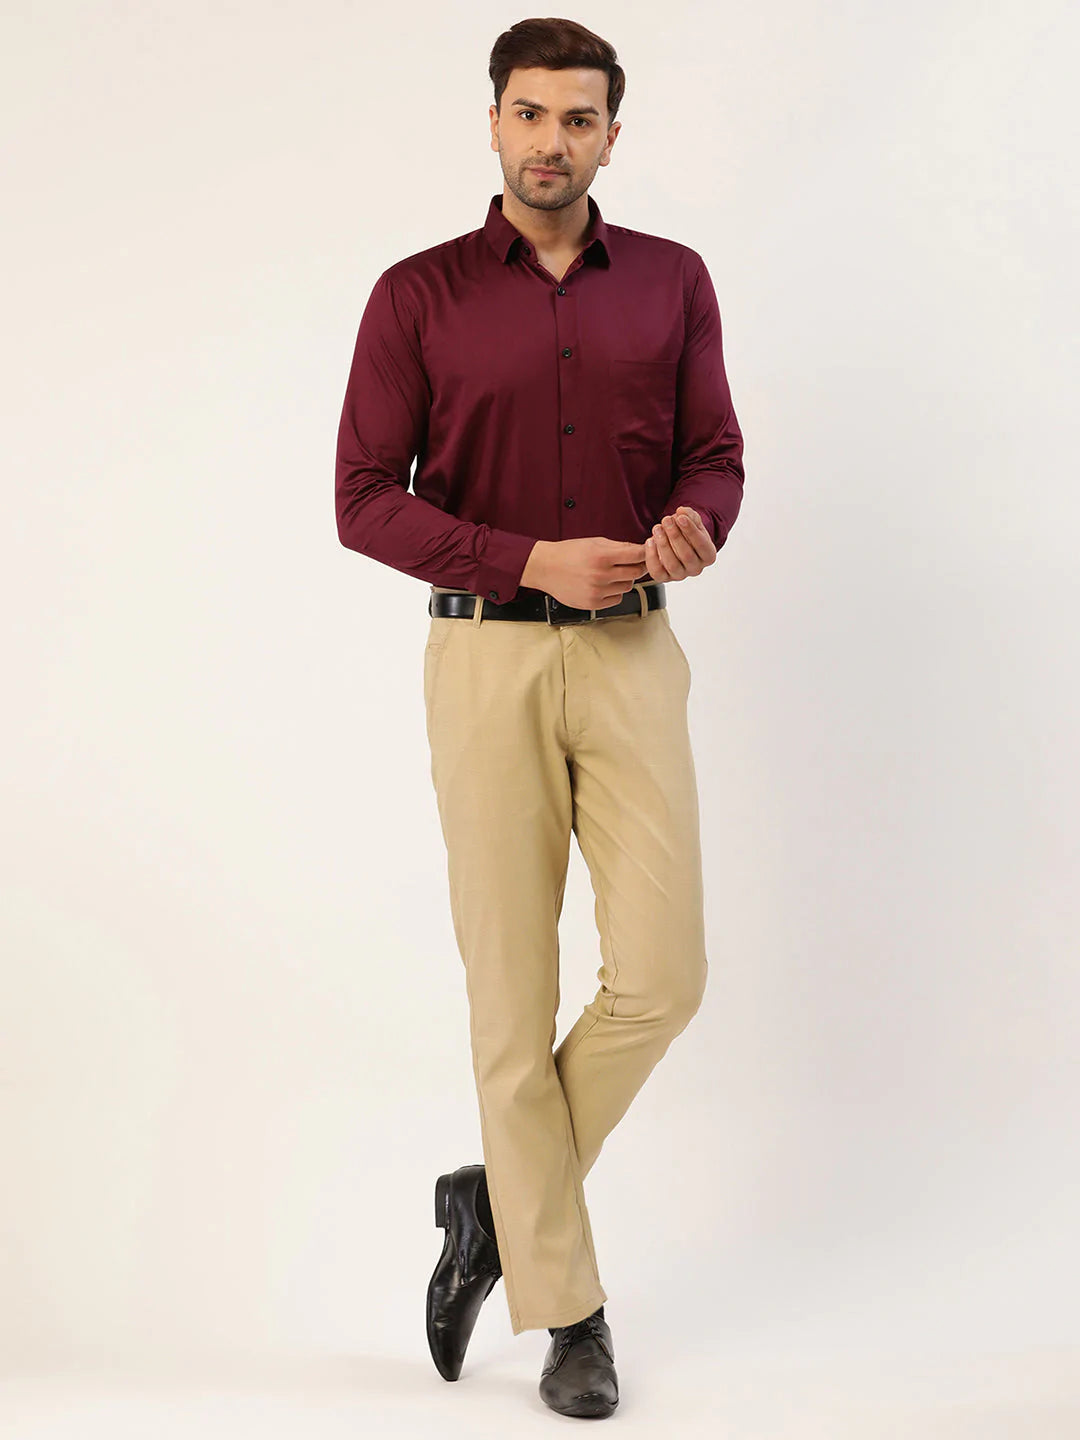 Jainish Men's Beige Checked Formal Trousers ( FGP 270 Beige )